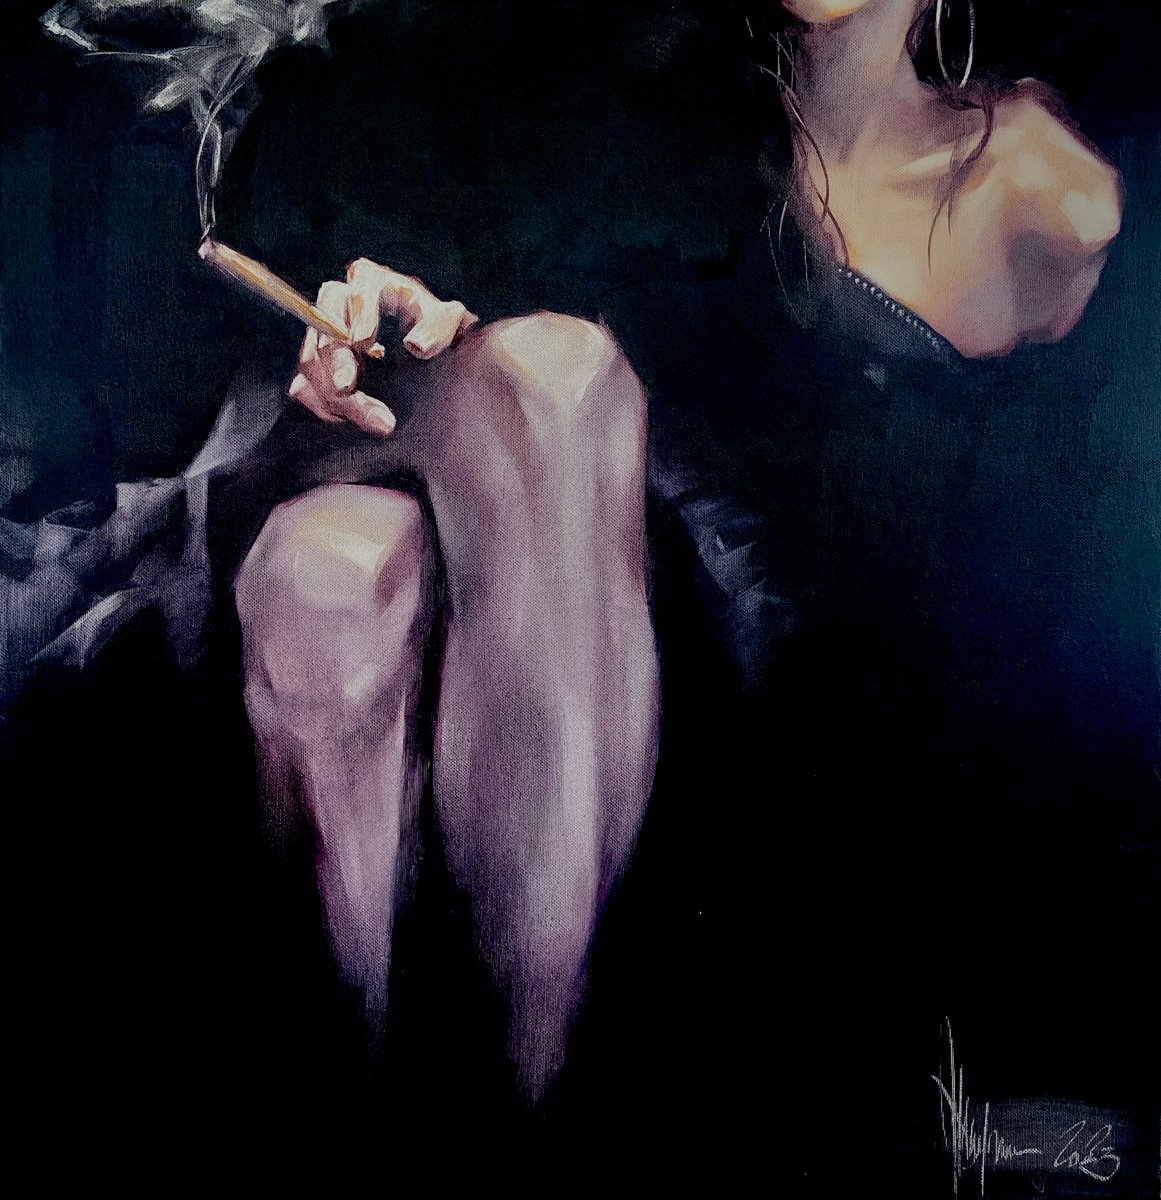 Night Joint
Size: 23.62 W x 23.62 H x 2 D in / 60 x 60 x 5 cm
2023
Igor Shulman

Read more: shulmanart.com/9o4sm7

#IgorShulman #ShulmanArt #OilPainting #Painting #Artist #Art #Figurative #Erotic #Moody #PositiveFeelings #SmokingWoman #Ambiance